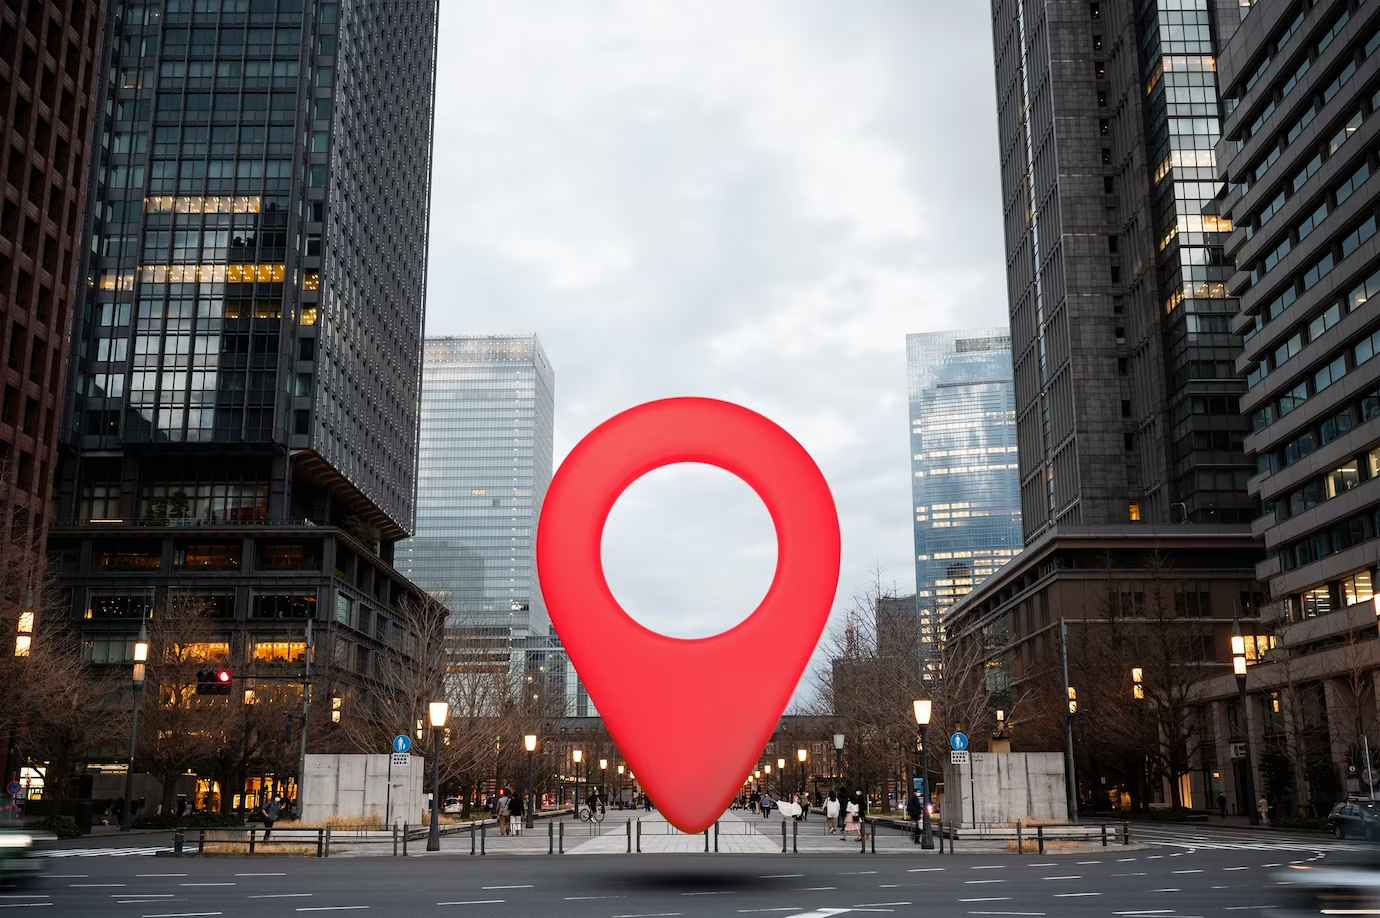 location based marketing implementation